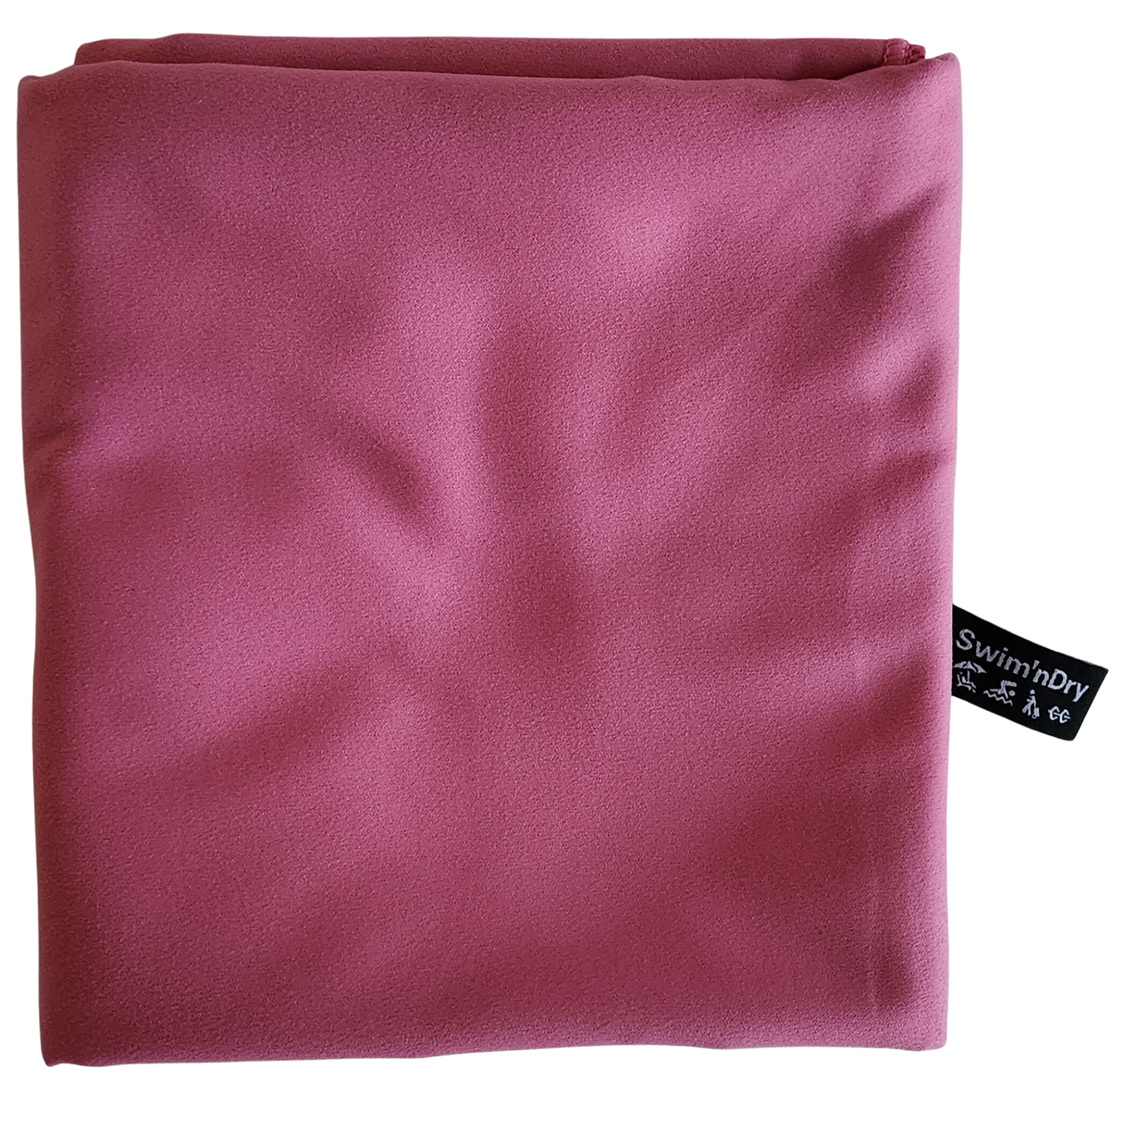 Adv towel pink 0295